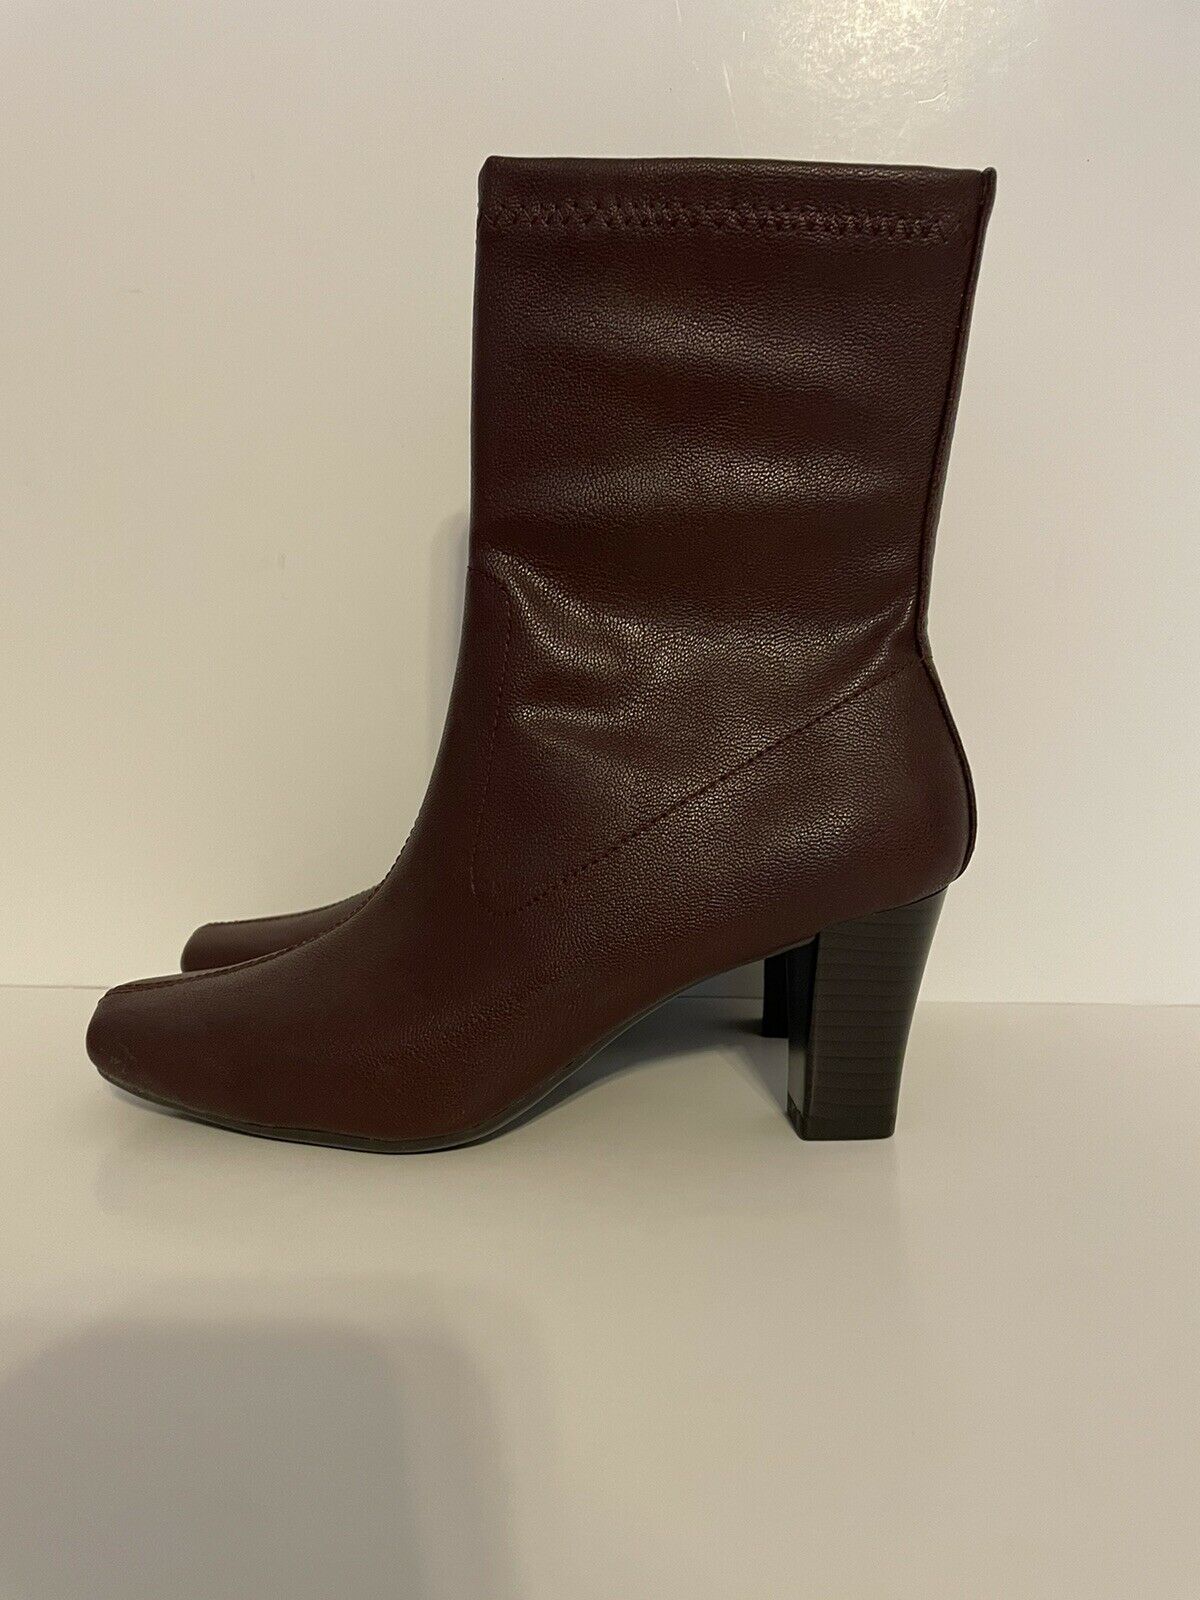 Aerosoles Women’s Wine Dress Boots Shoes 5.5 M , Zipper, Heel Rest Technology